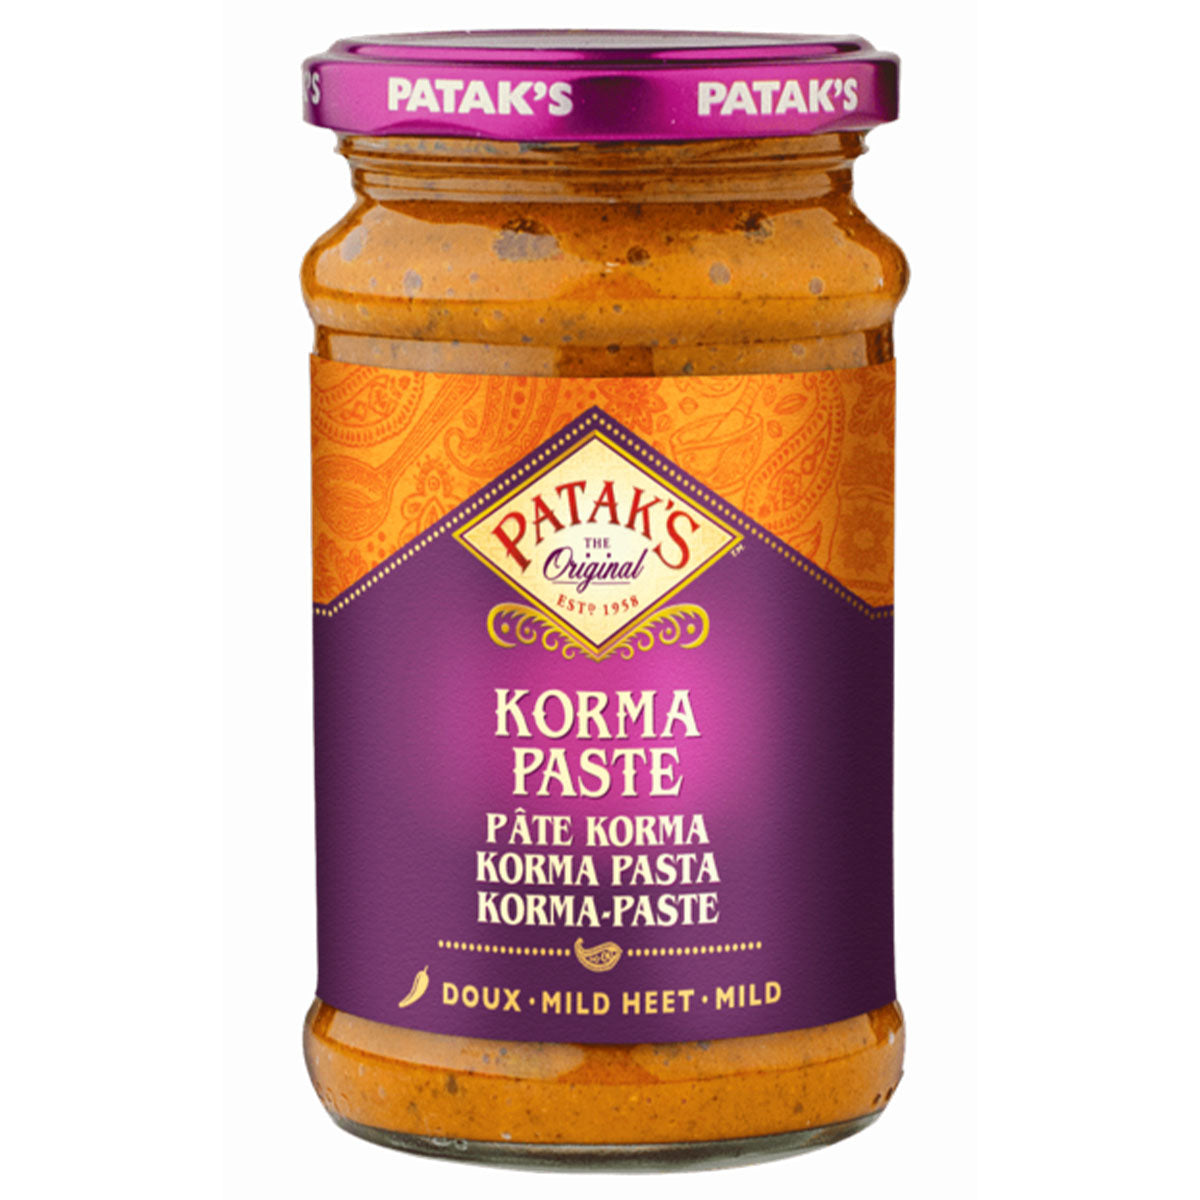 Patak's - Original Korma Paste - 290g - Continental Food Store